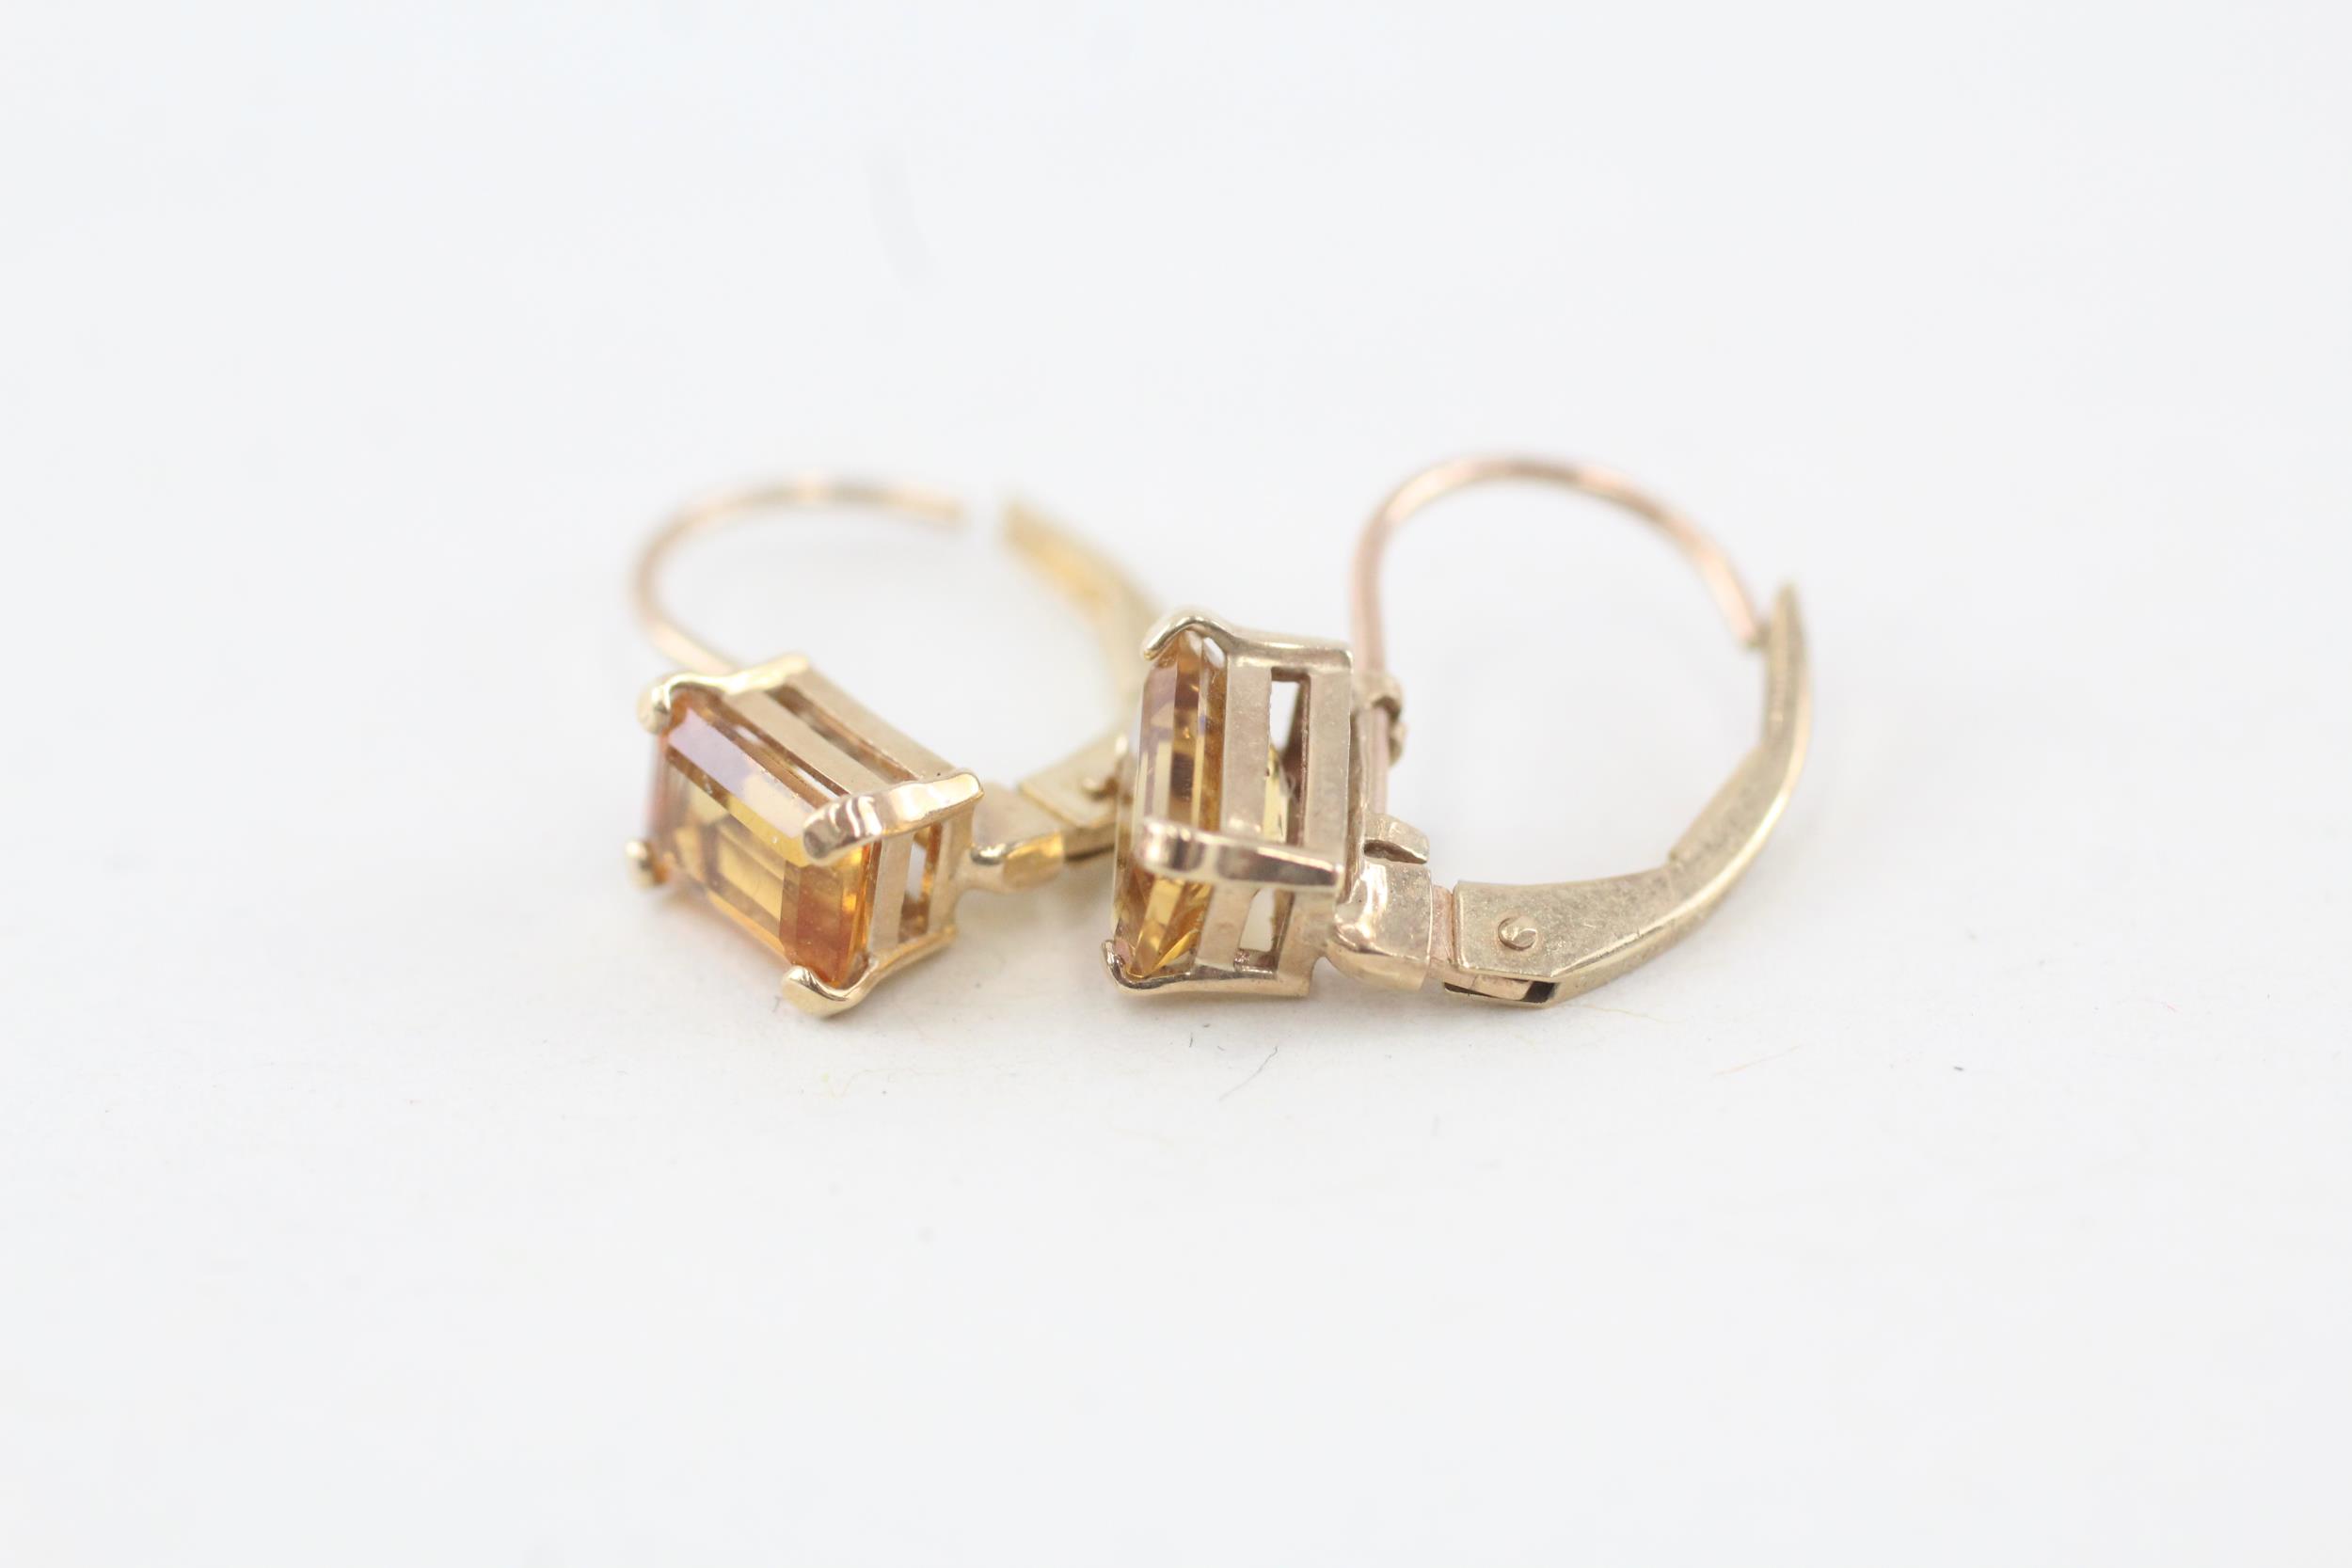 9ct gold rectangular cut citrine set leverback earrings 1.2 g - Image 2 of 4